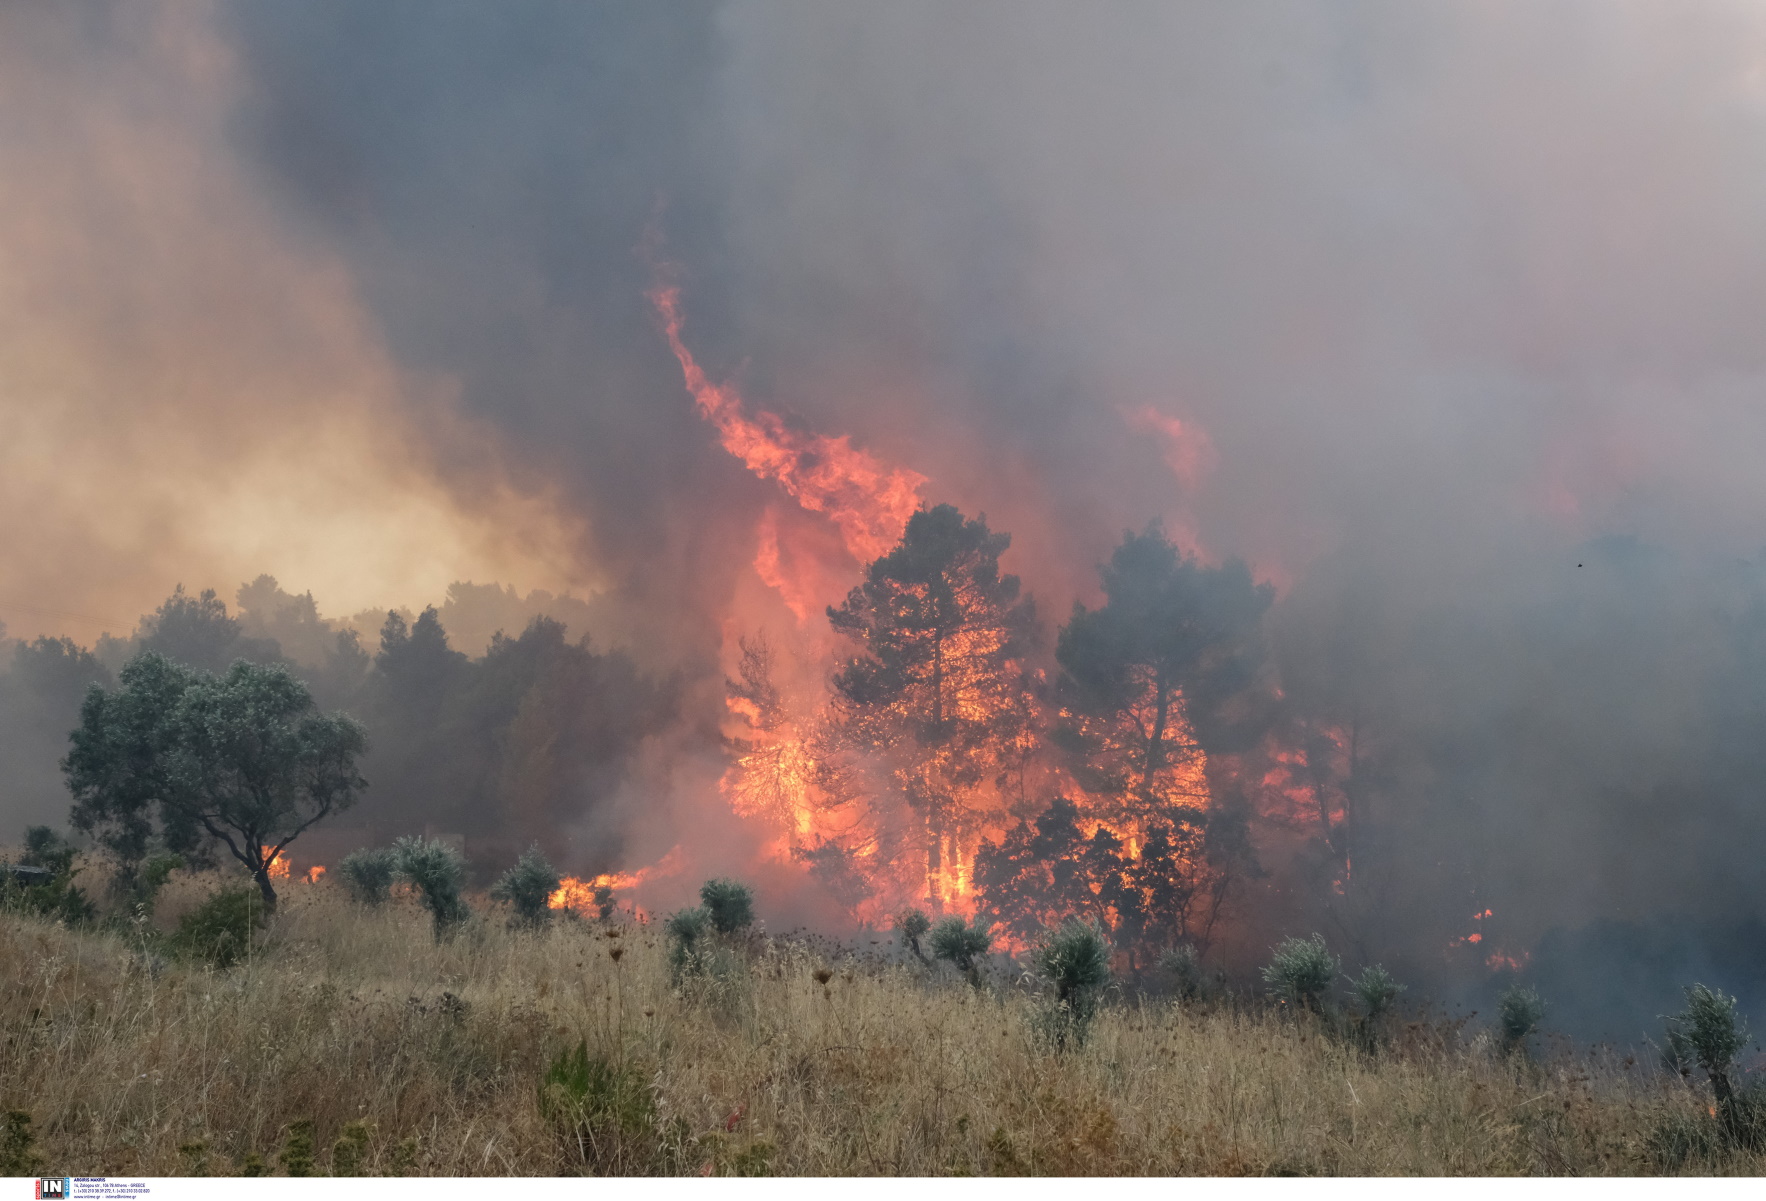 Meteo για φωτιές στην Ελλάδα: Σε αύξηση η ευφλεκτότητα των δασικών καυσίμων παρά τις βροχές